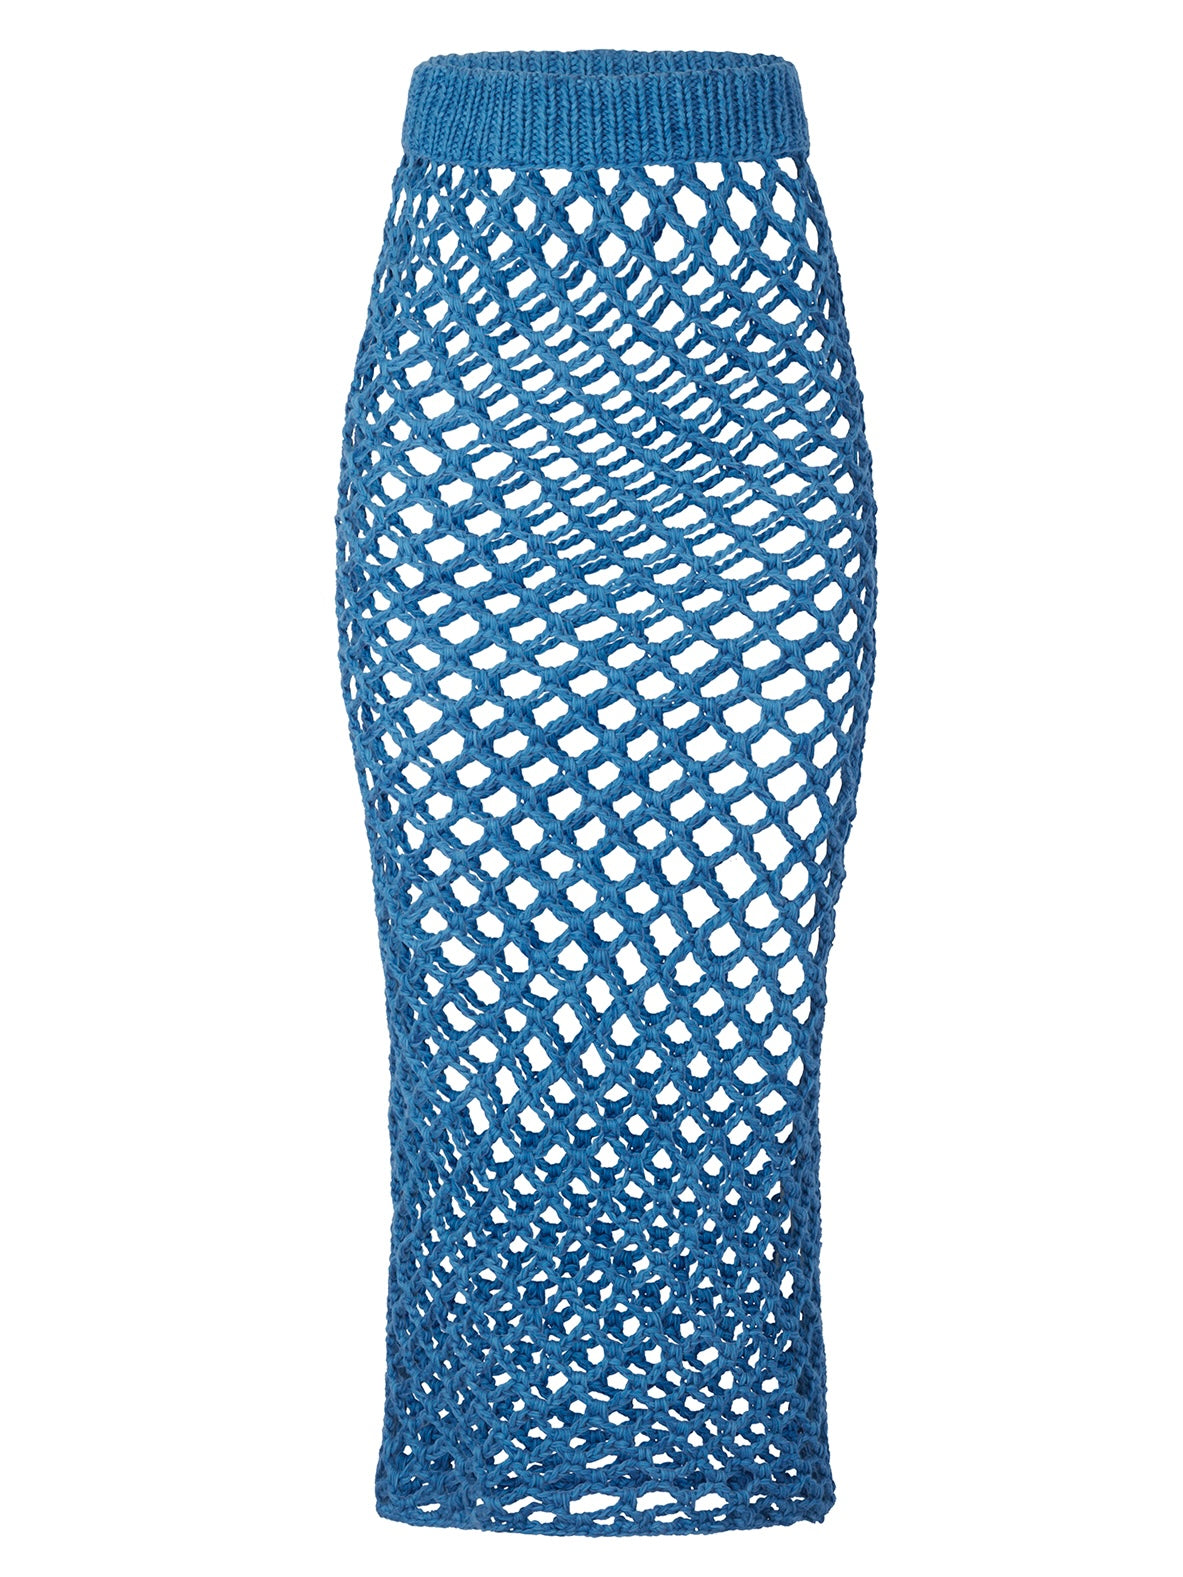 Mérida Skirt in Blue